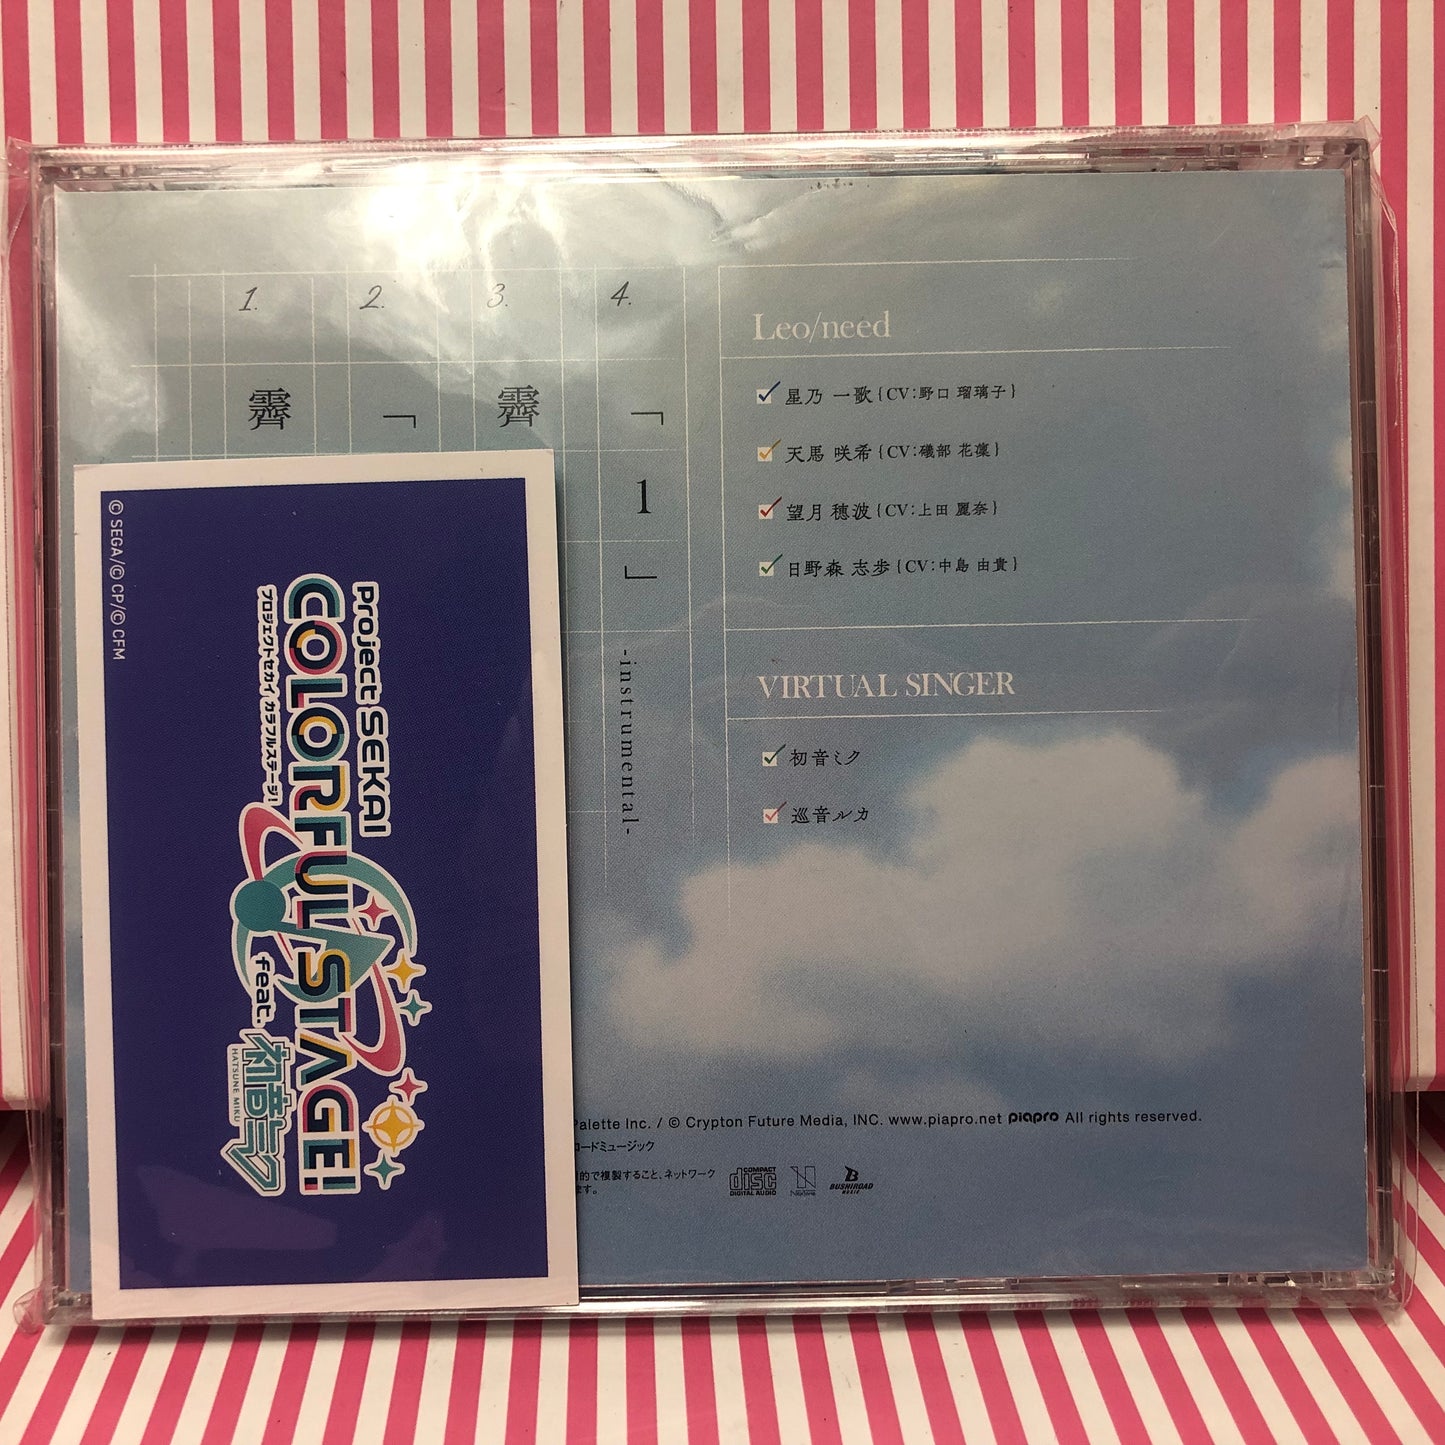 Scène colorée du projet Sekai ! pi. Hatsune Miku - LeoNeed 2e single "1" CD